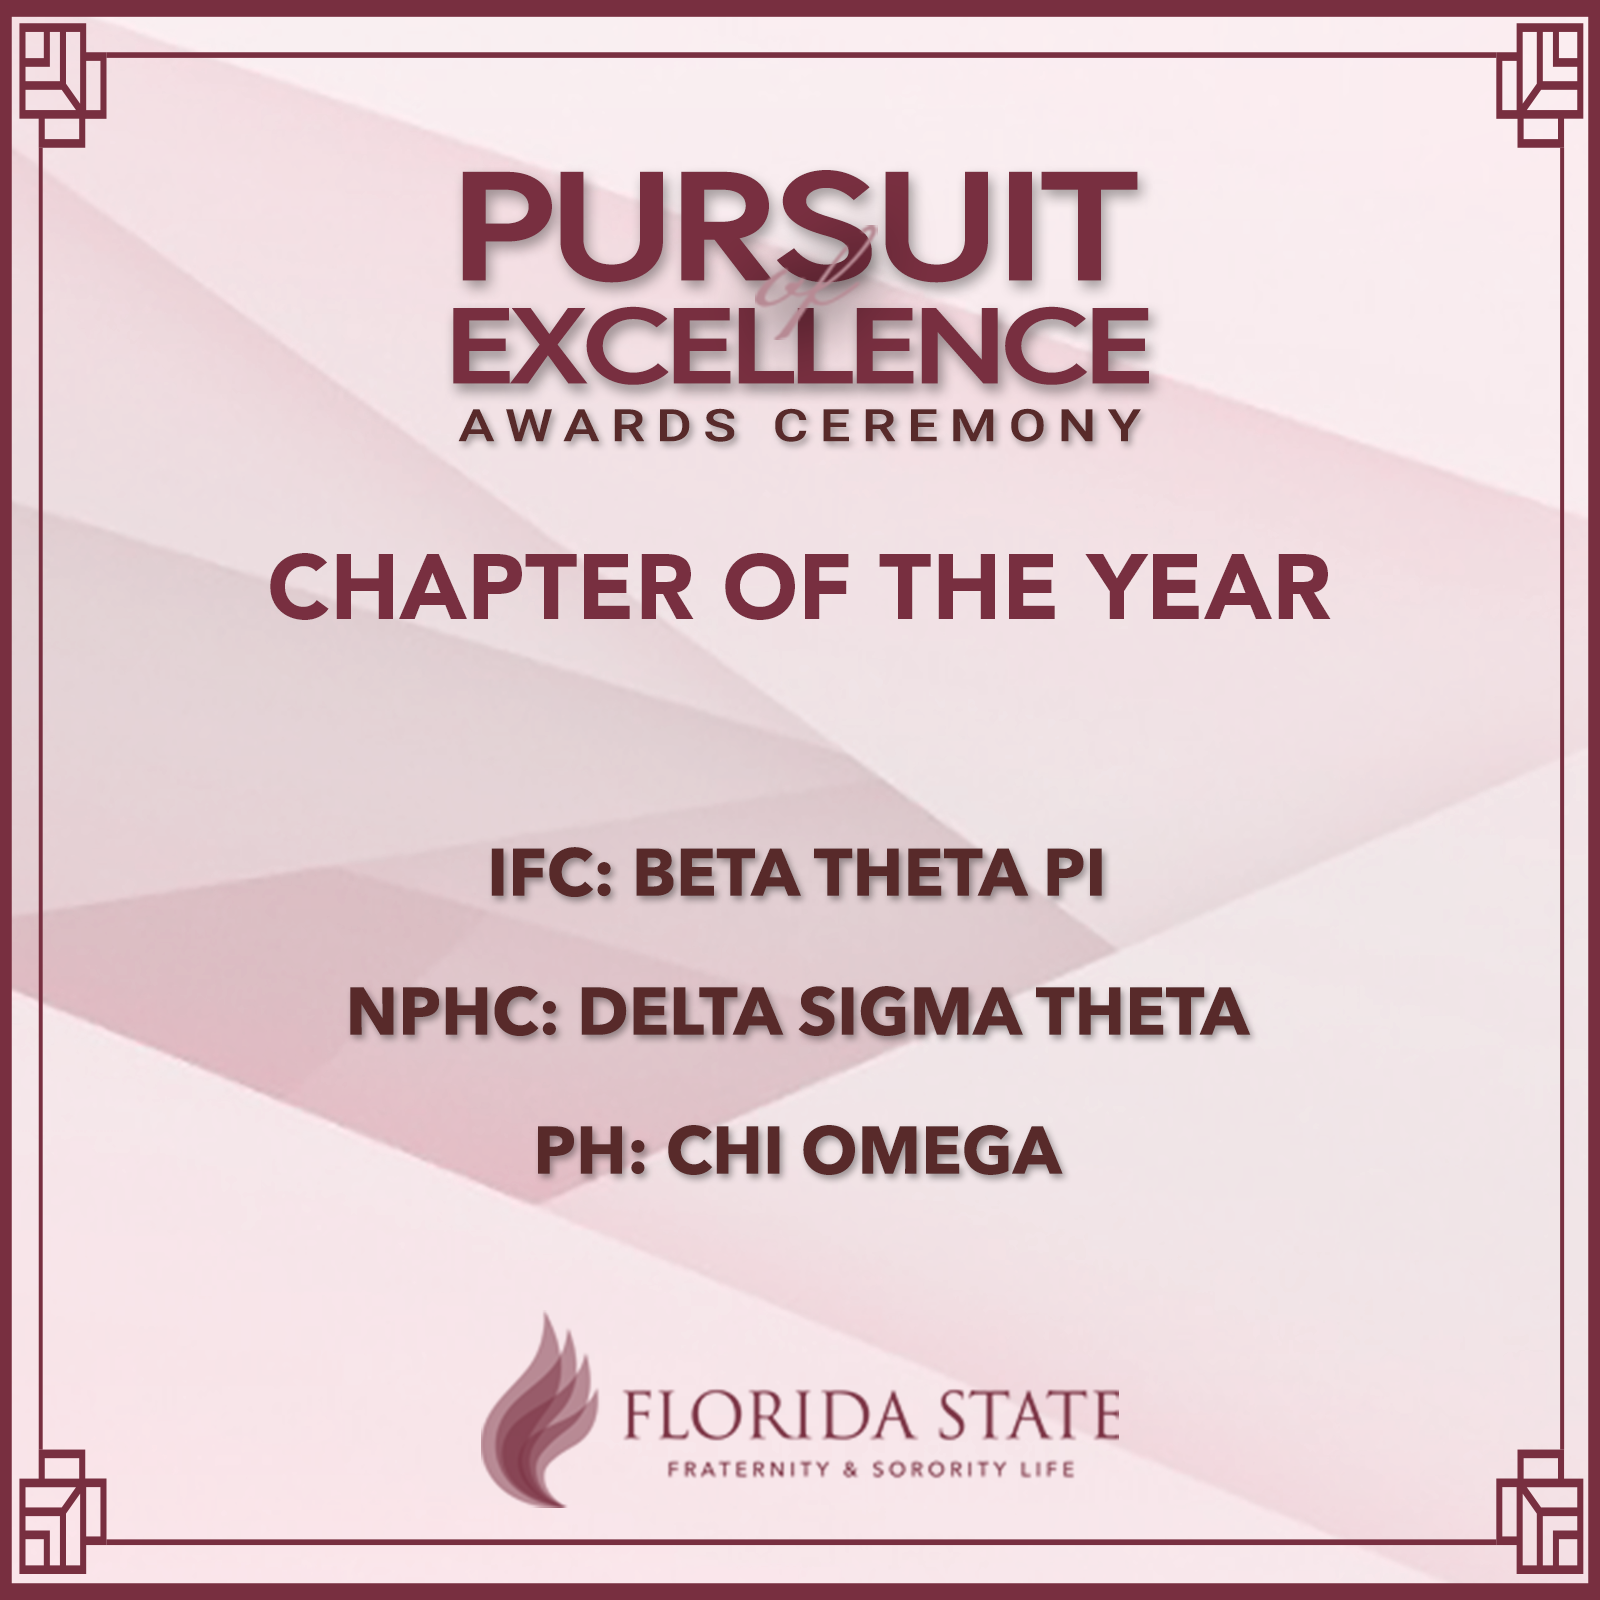 Chapter of the year award winners - Beta Theta Pi, Delta Sigma Theta, and Chi Omega